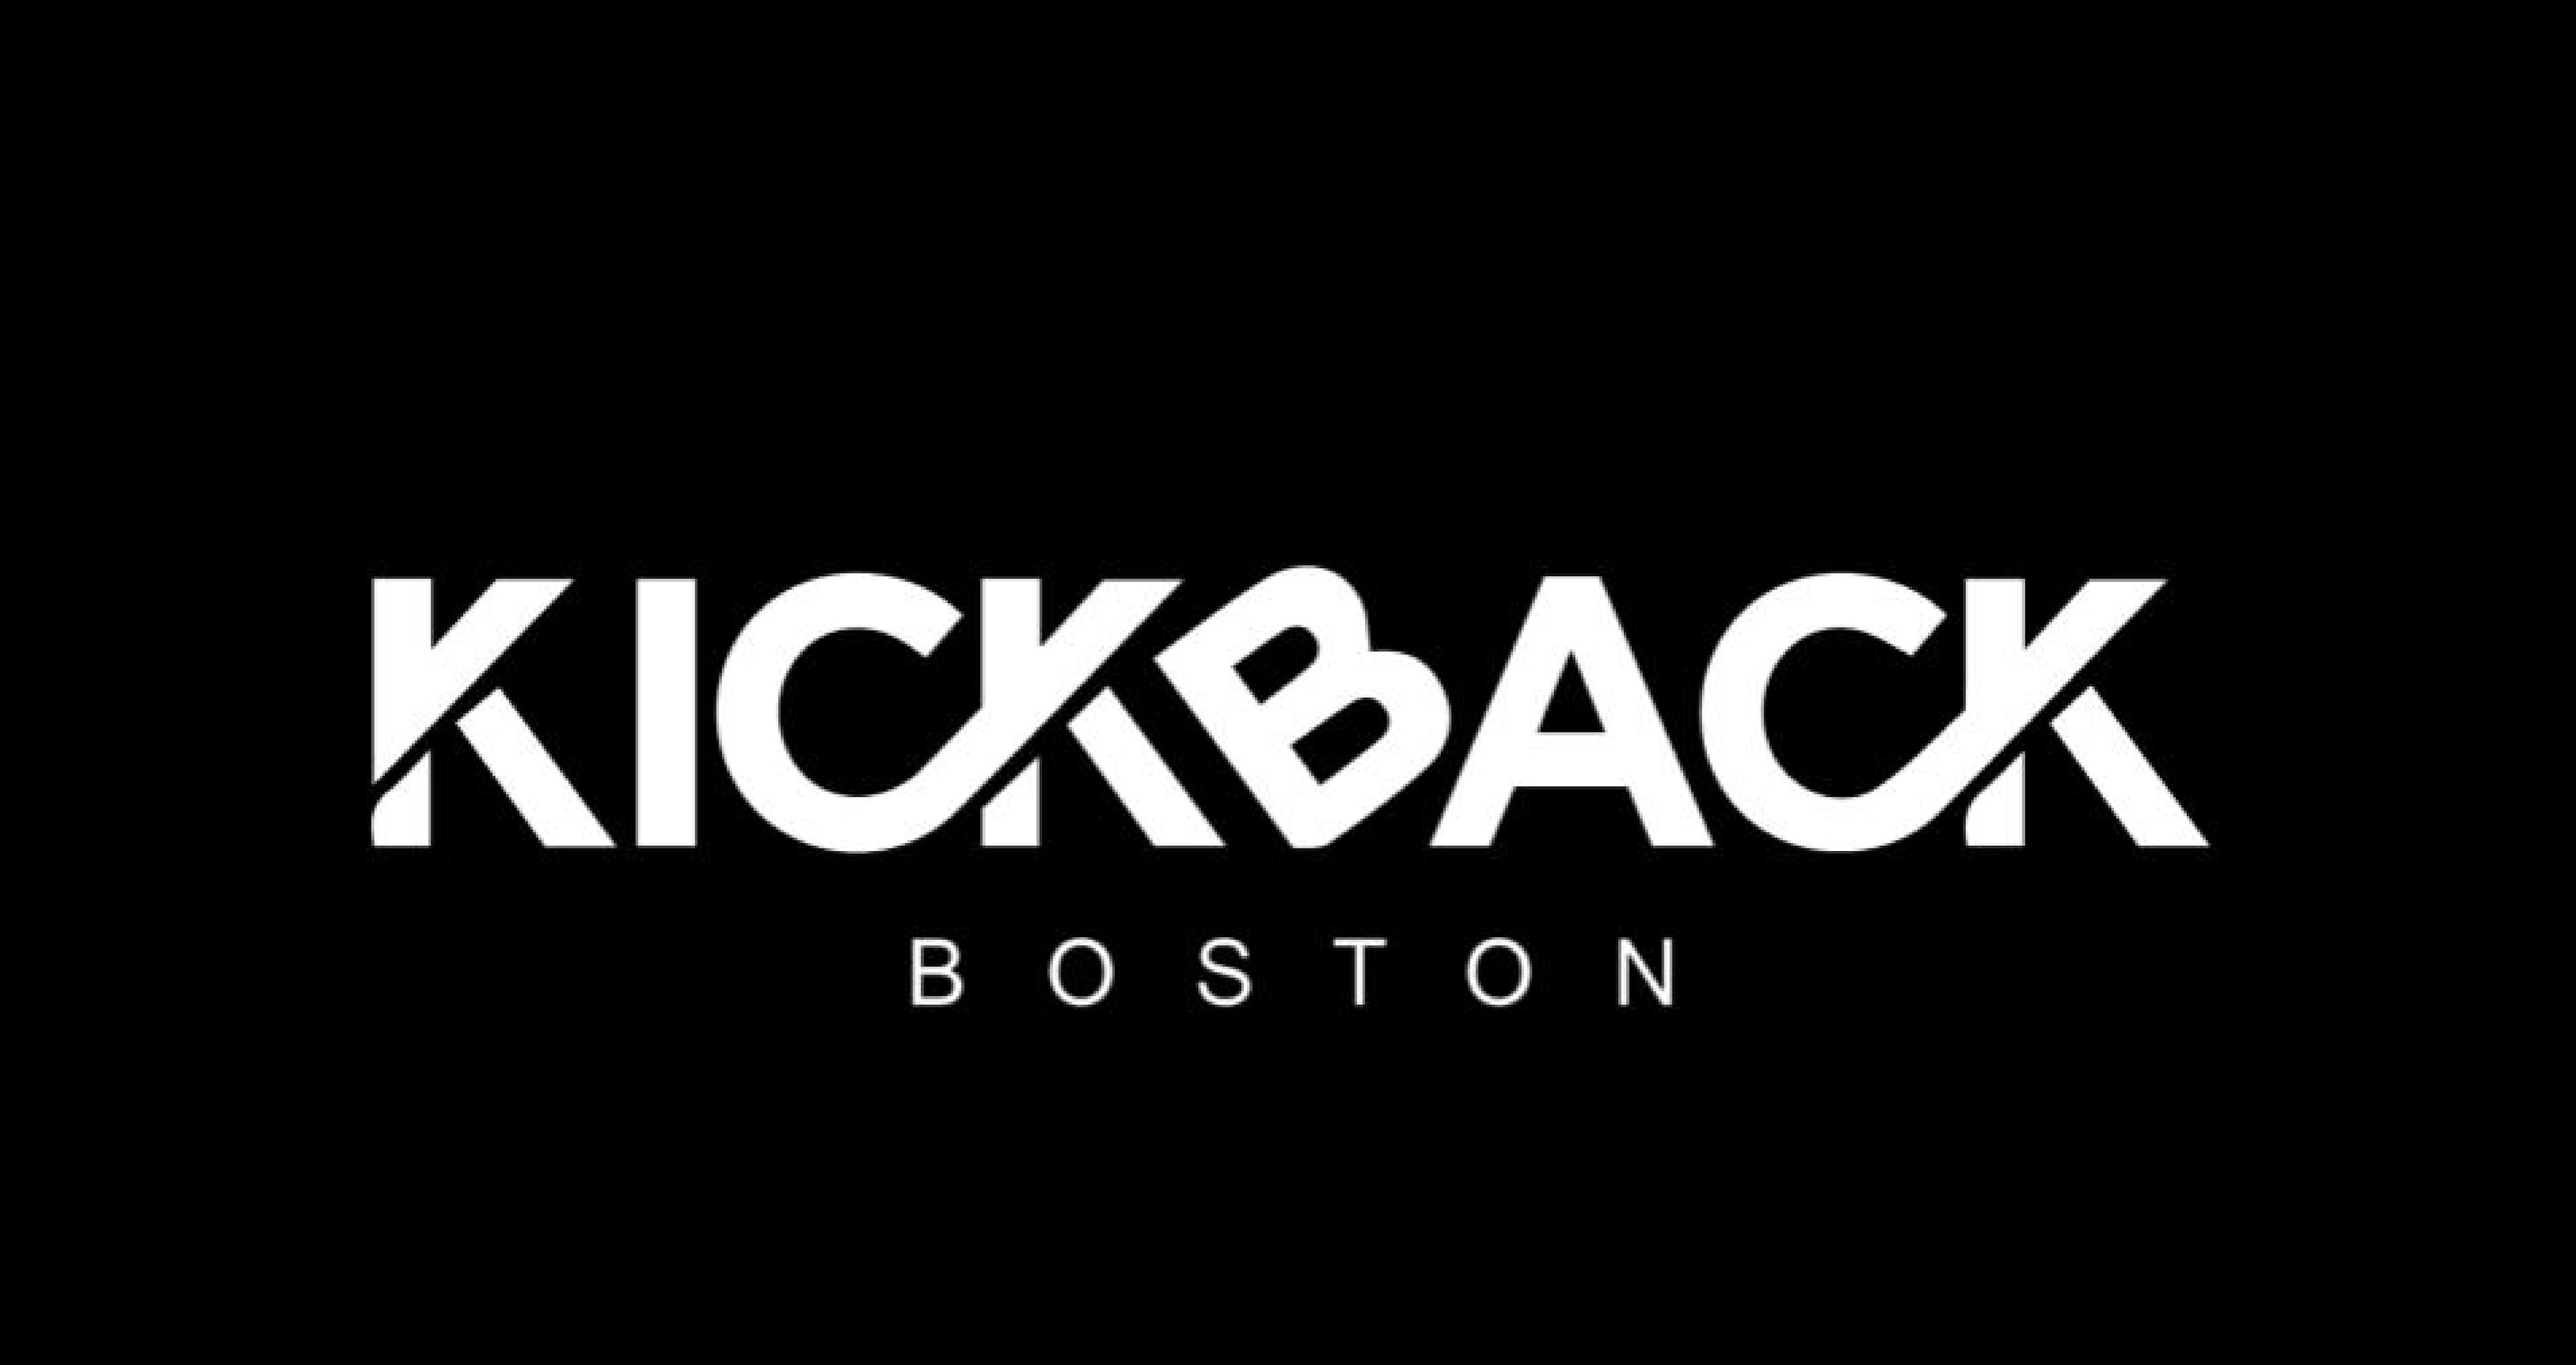 Kickback Boston uses revenue sharing to promote in-person event title